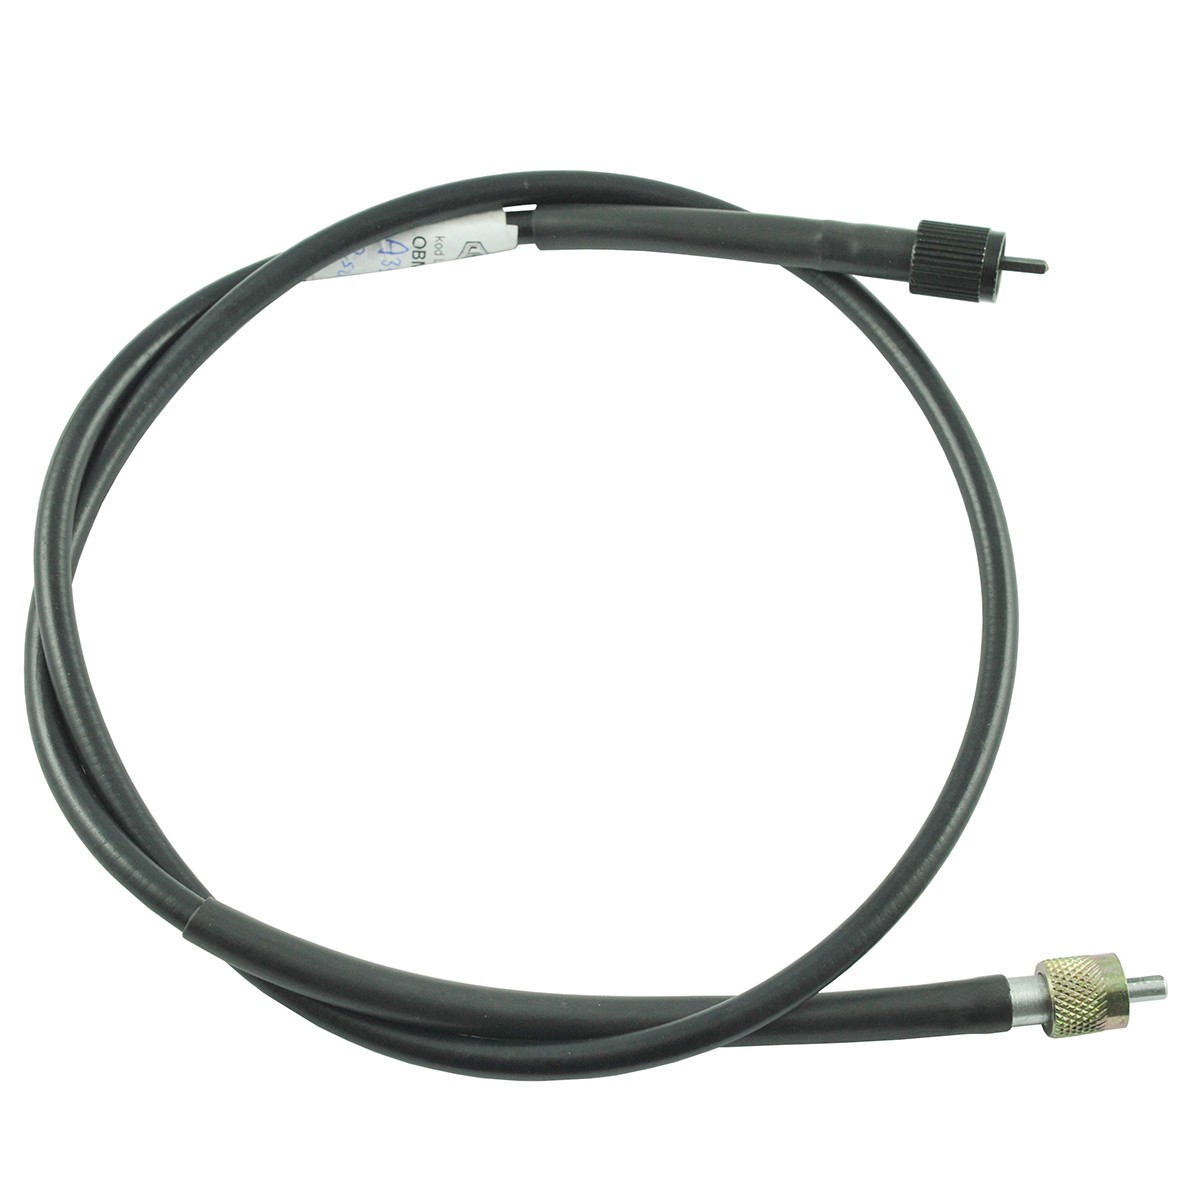 Counter cable / 1020 mm / Kubota L3608 / TC422-34653 / 5-25-123-18